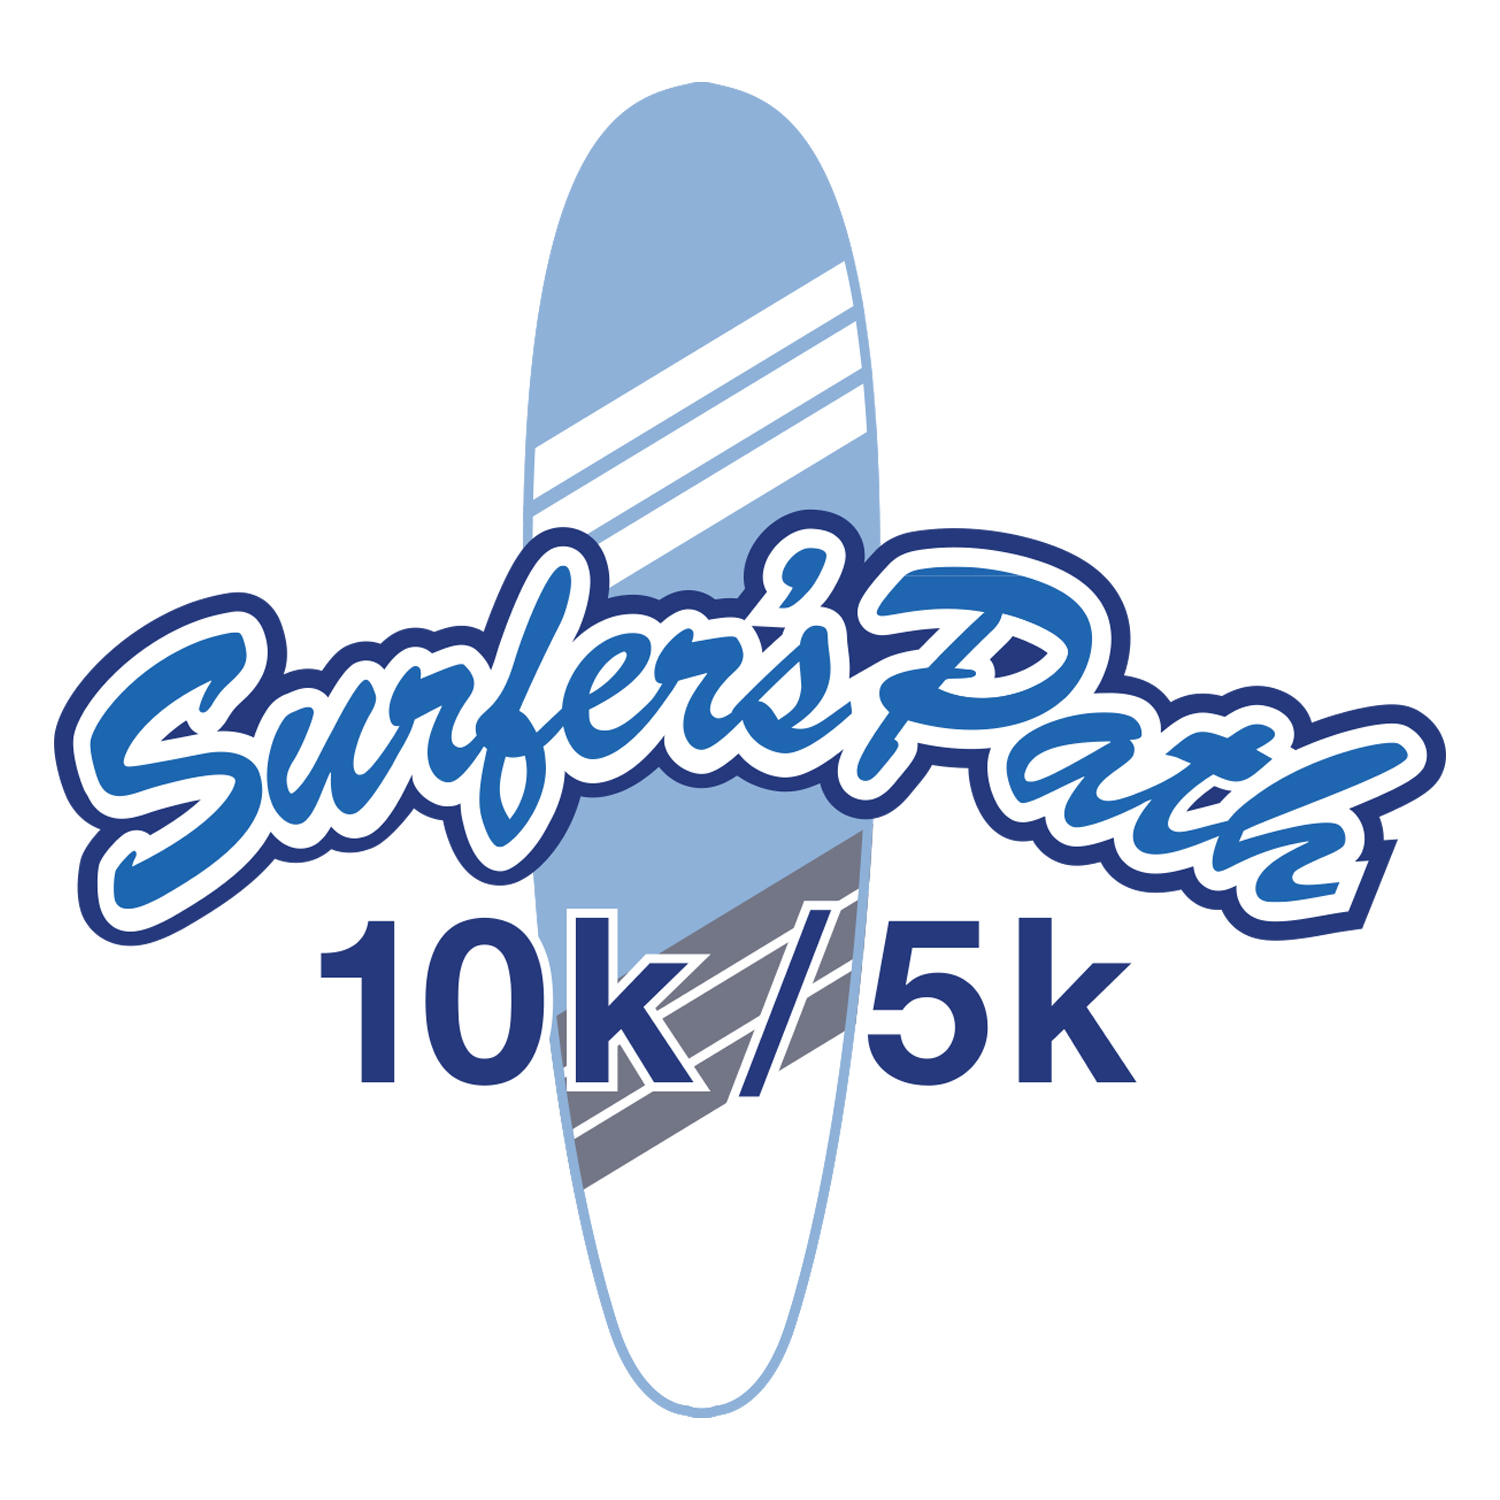 Surfer’s Path 10K & 5K logo on RaceRaves